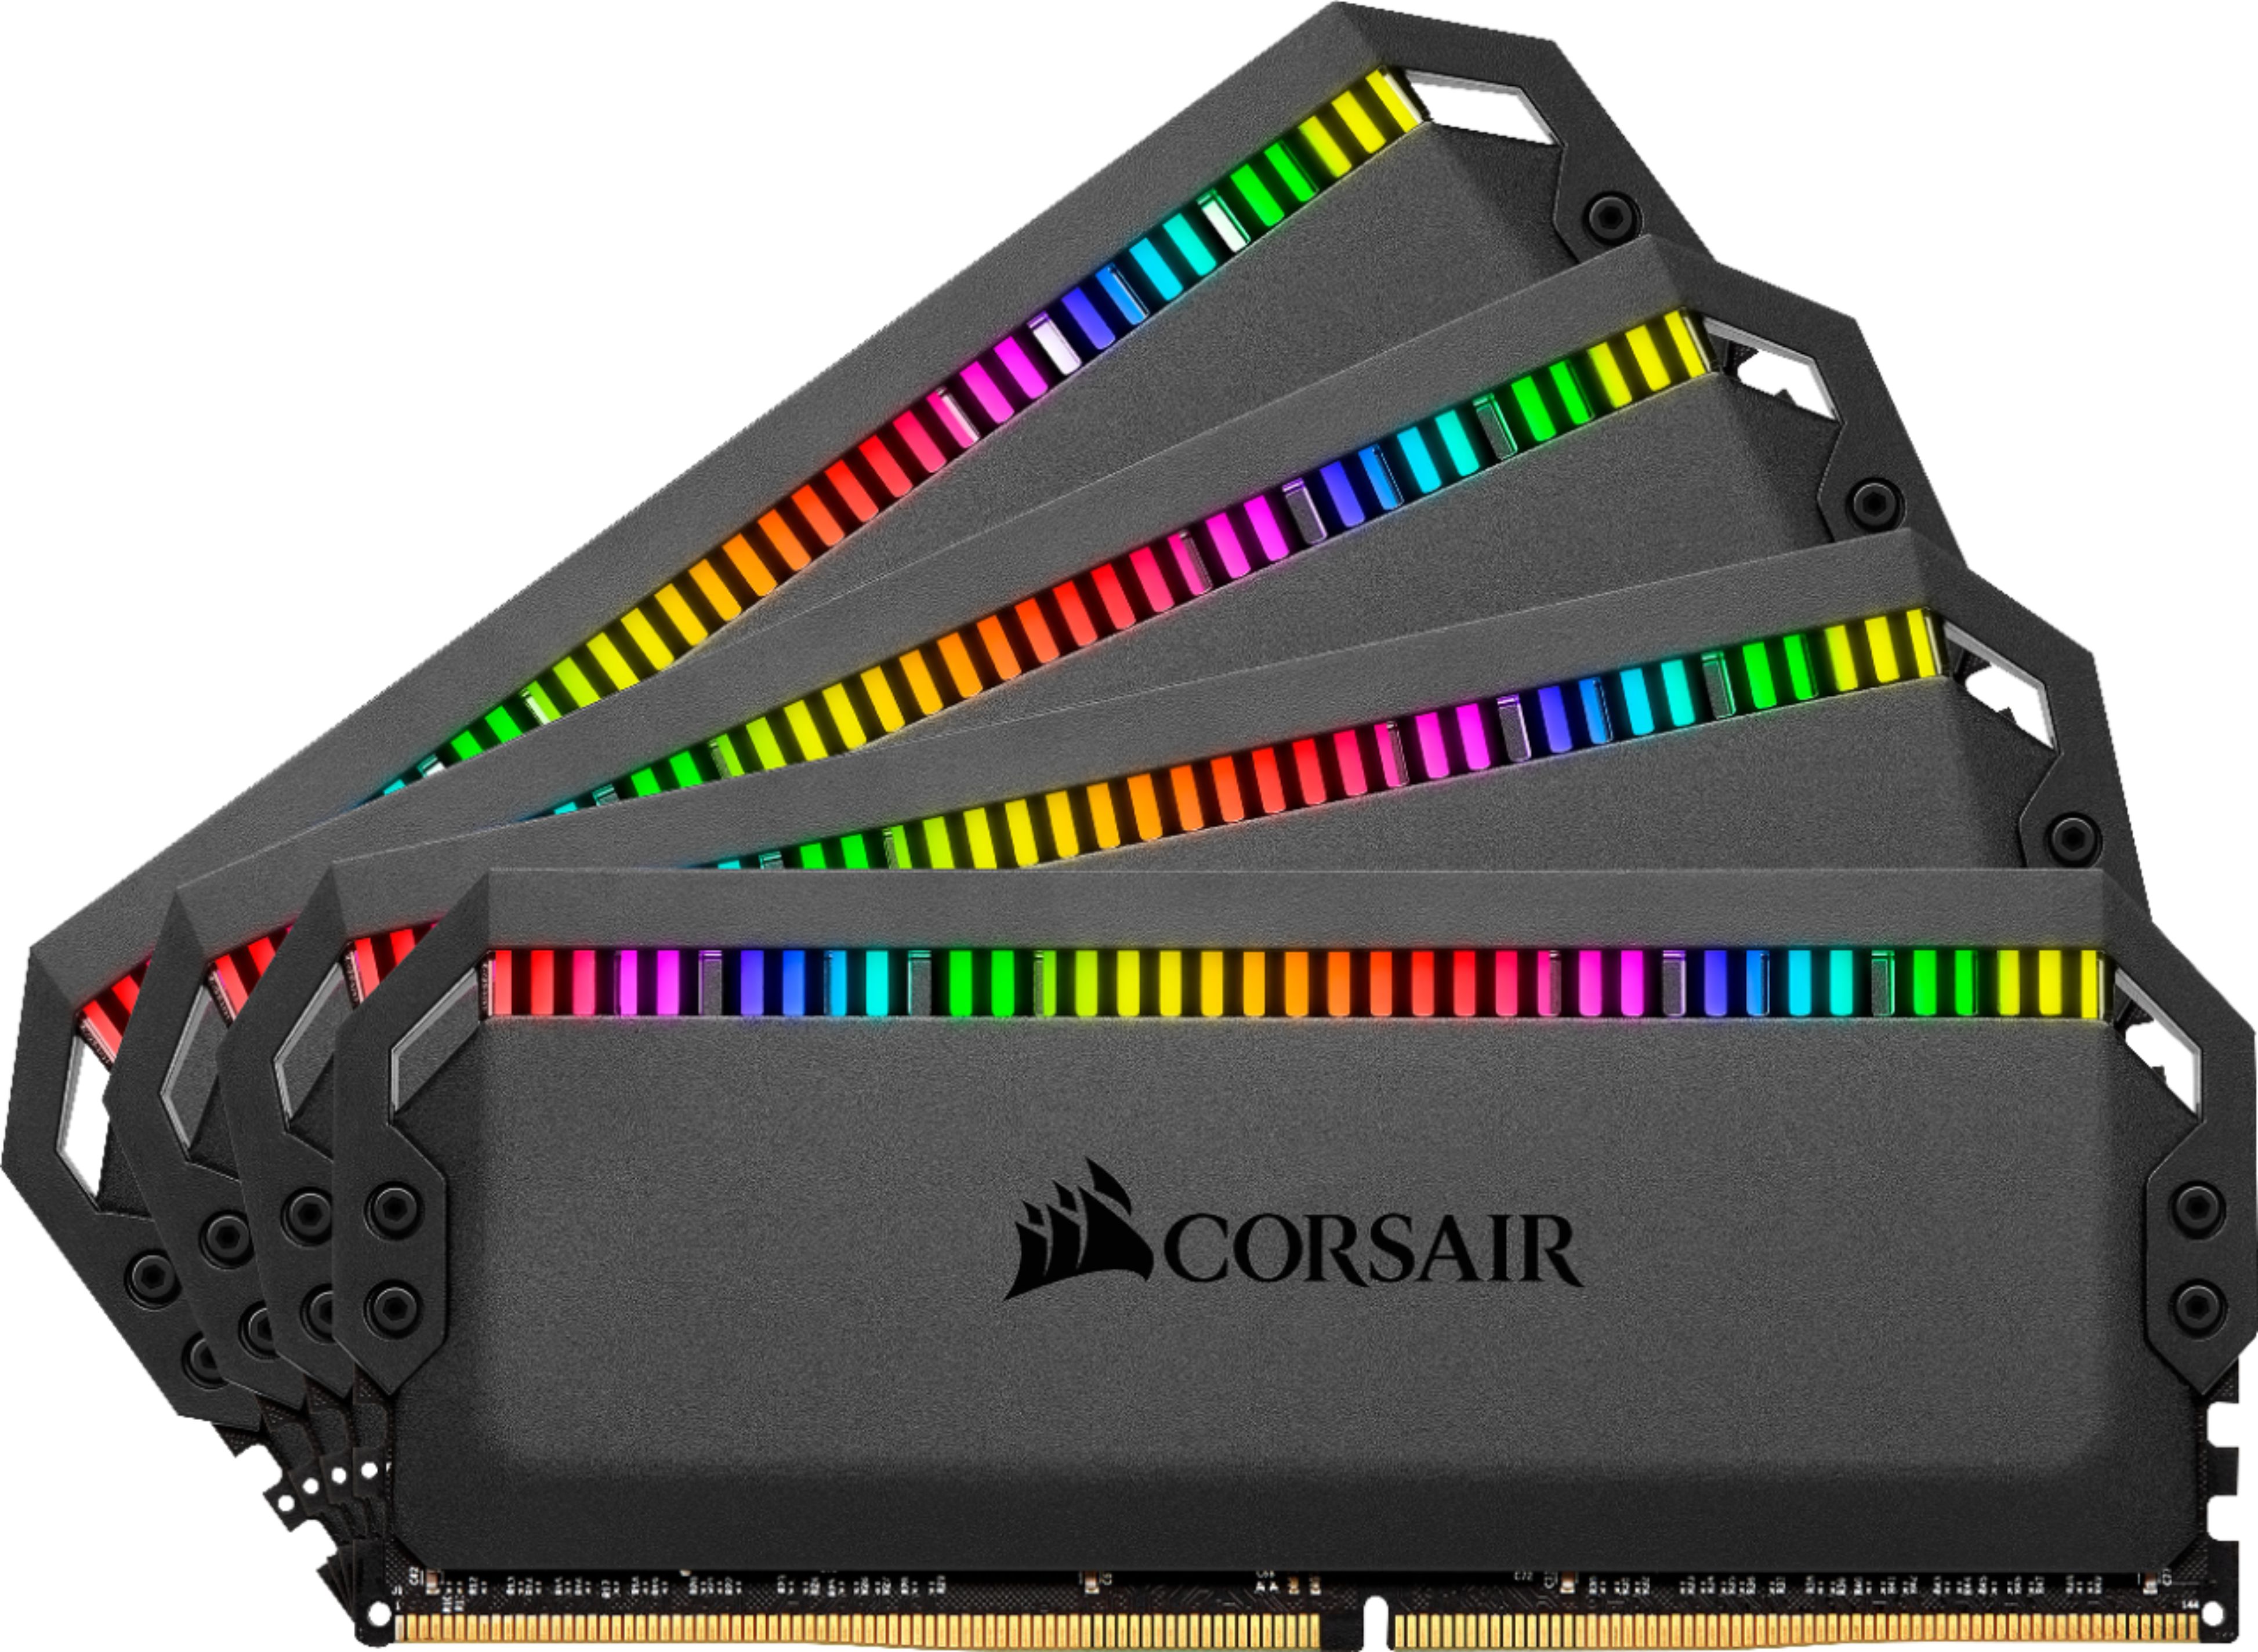 CORSAIR launches DOMINATOR PLATINUM RGB DDR4 RAM kits